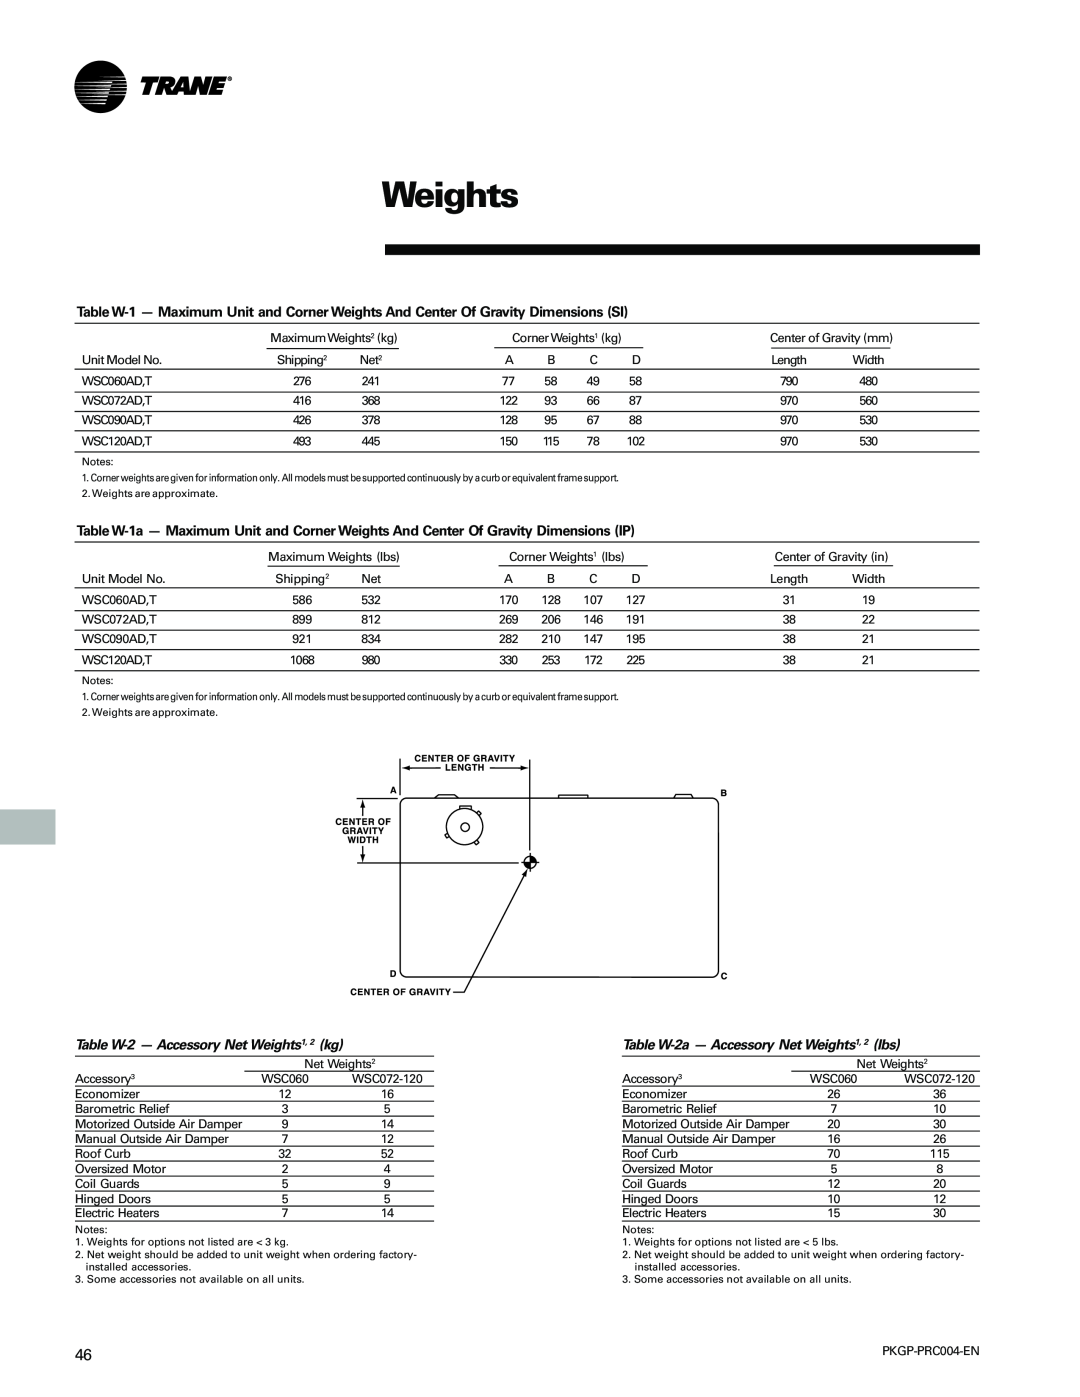 Trane WSC060-120 manual Table W-2- Accessory Net Weights1, 2 kg, Table W-2a- Accessory Net Weights1, 2 lbs 